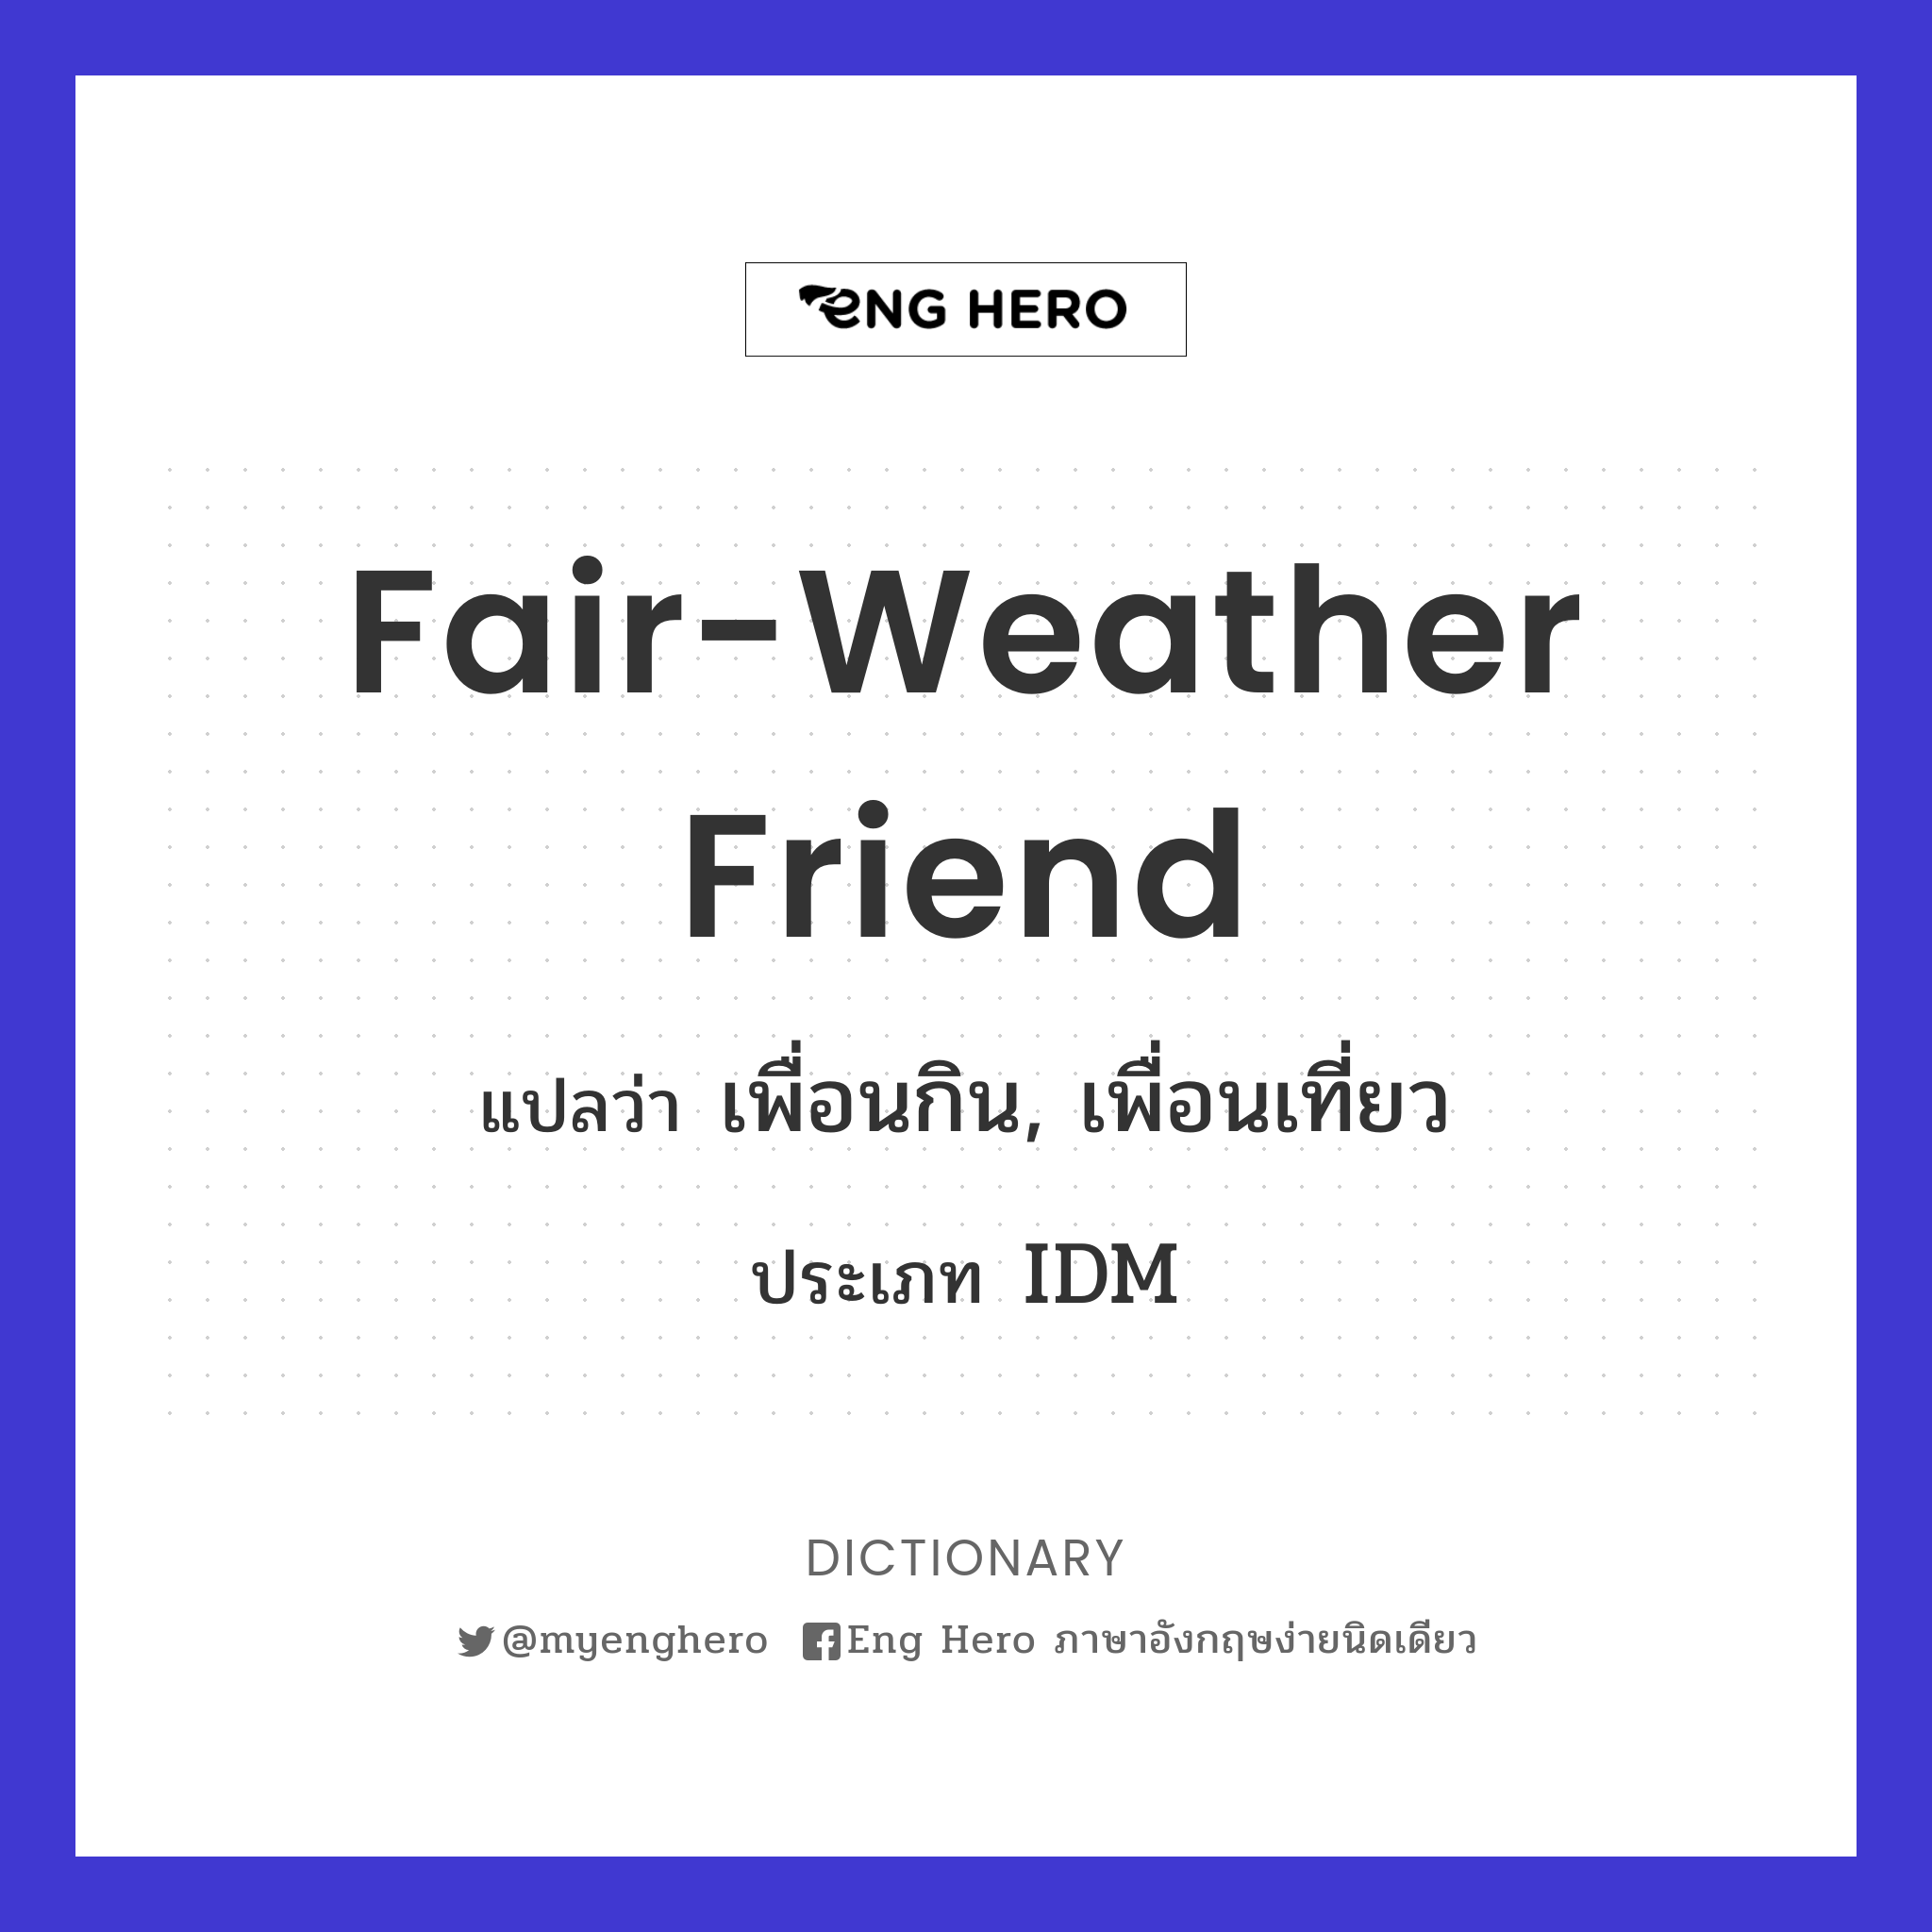 fair-weather friend